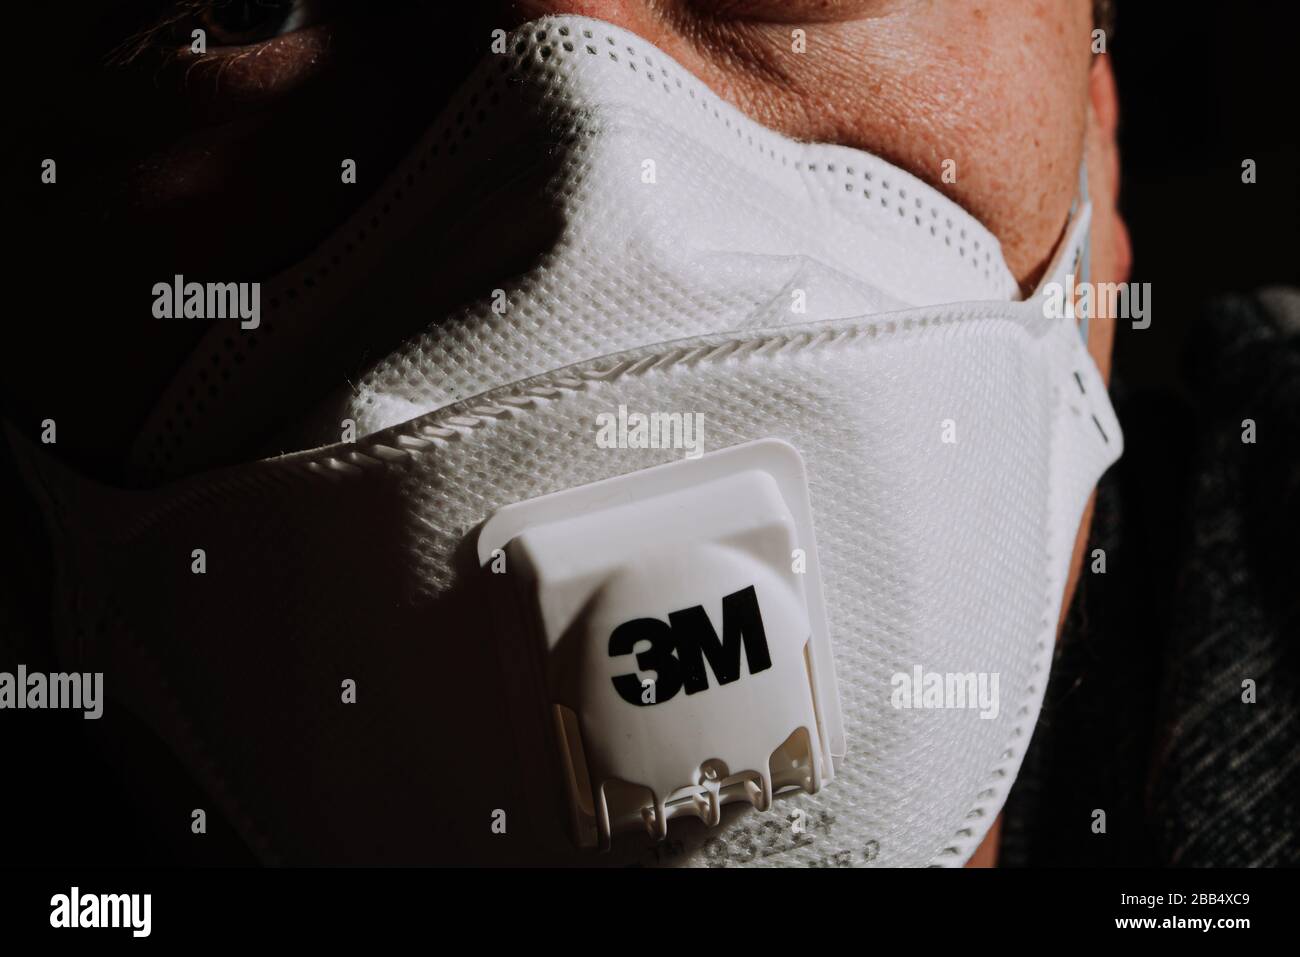 medical mask 3m n95 type on man looking away in light on black background coronavirus covid-19 Stock Photo